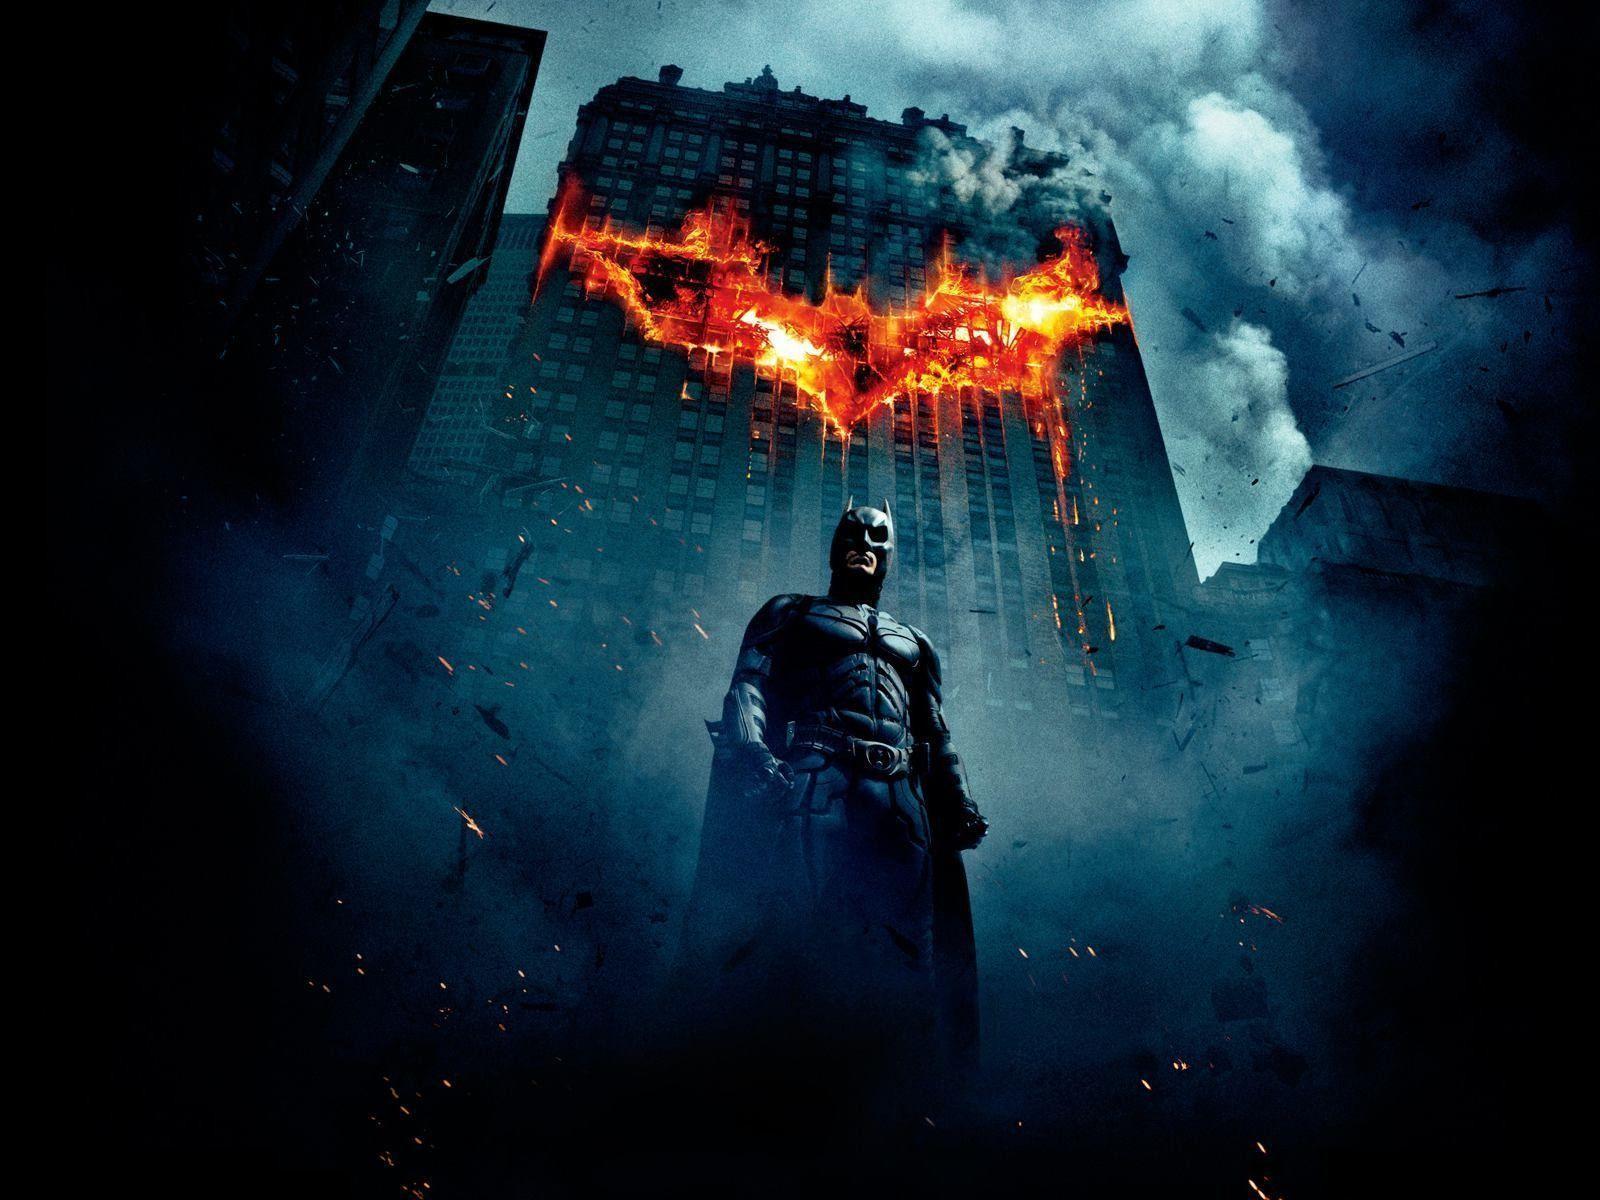 The Dark Knight Theme Song. Movie Theme Songs & TV Soundtracks